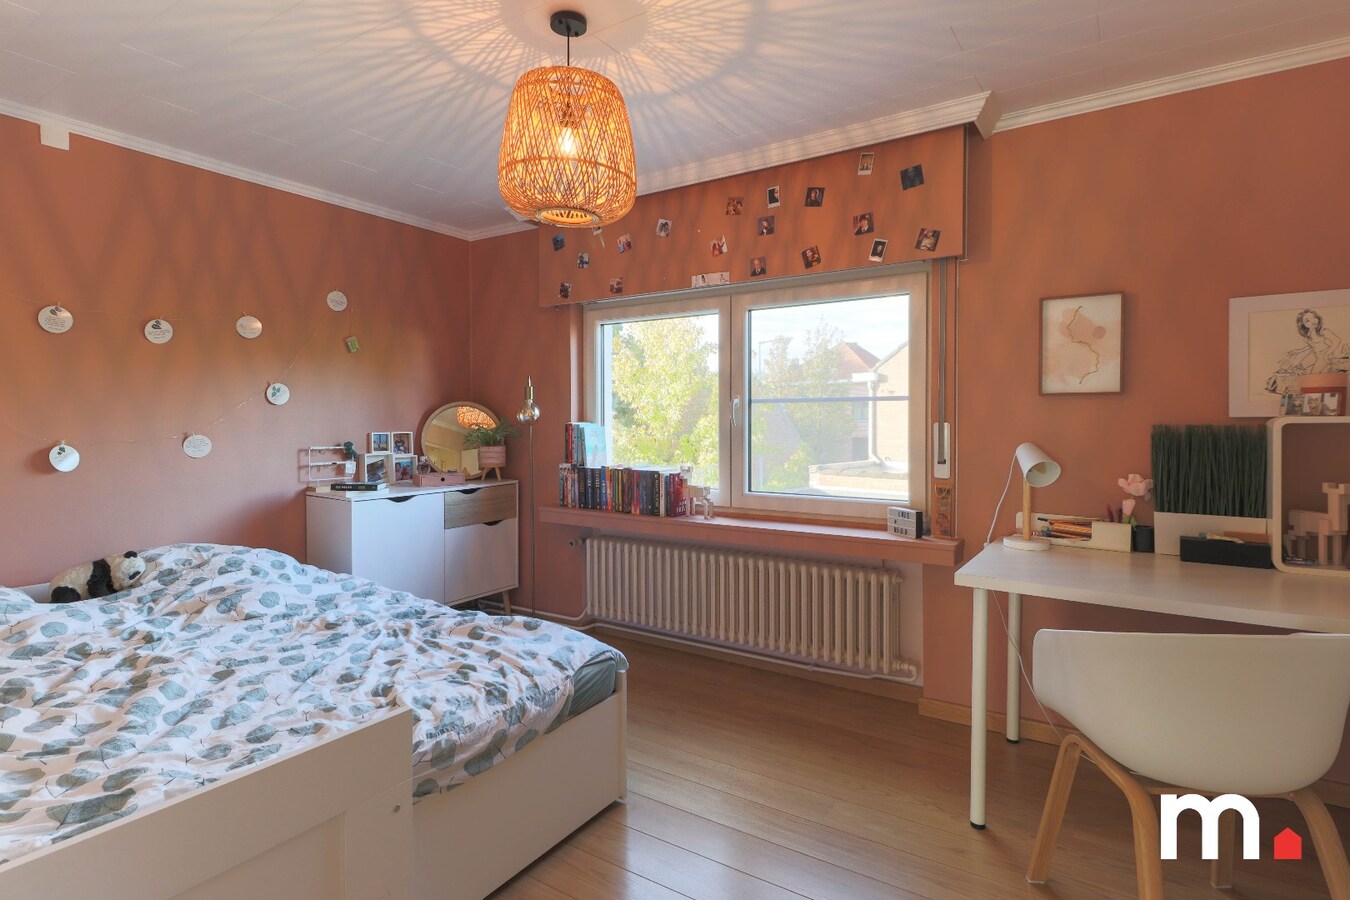 Fantastische woning met 4 slaapkamers en 2 badkamers te Wevelgem! 